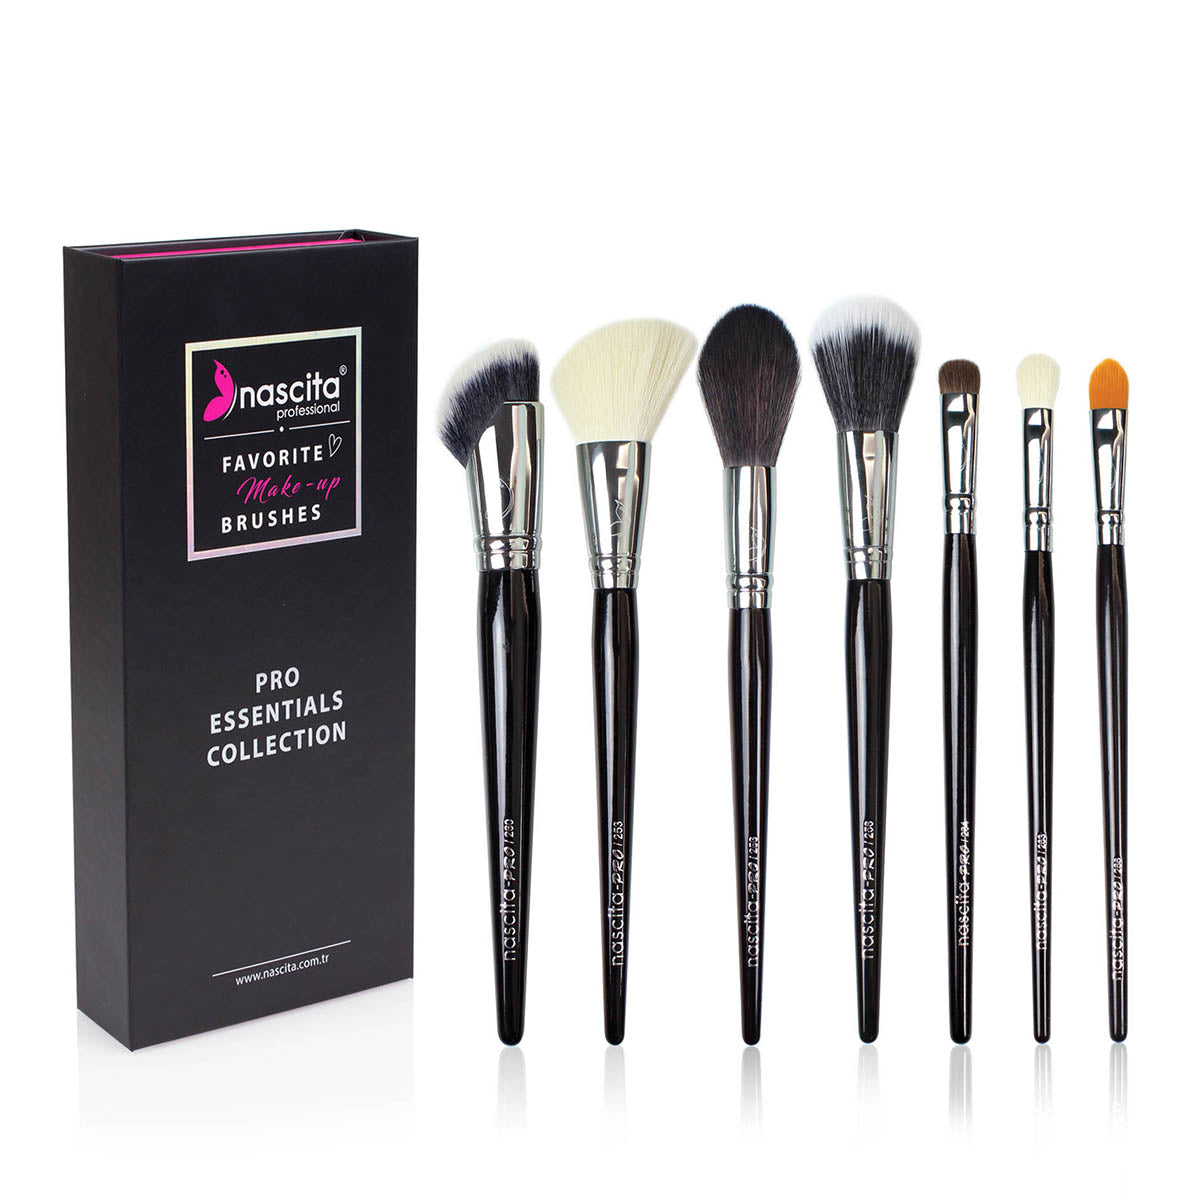 Nascita Pro Essentials Collection Basic Makeup Brush Set